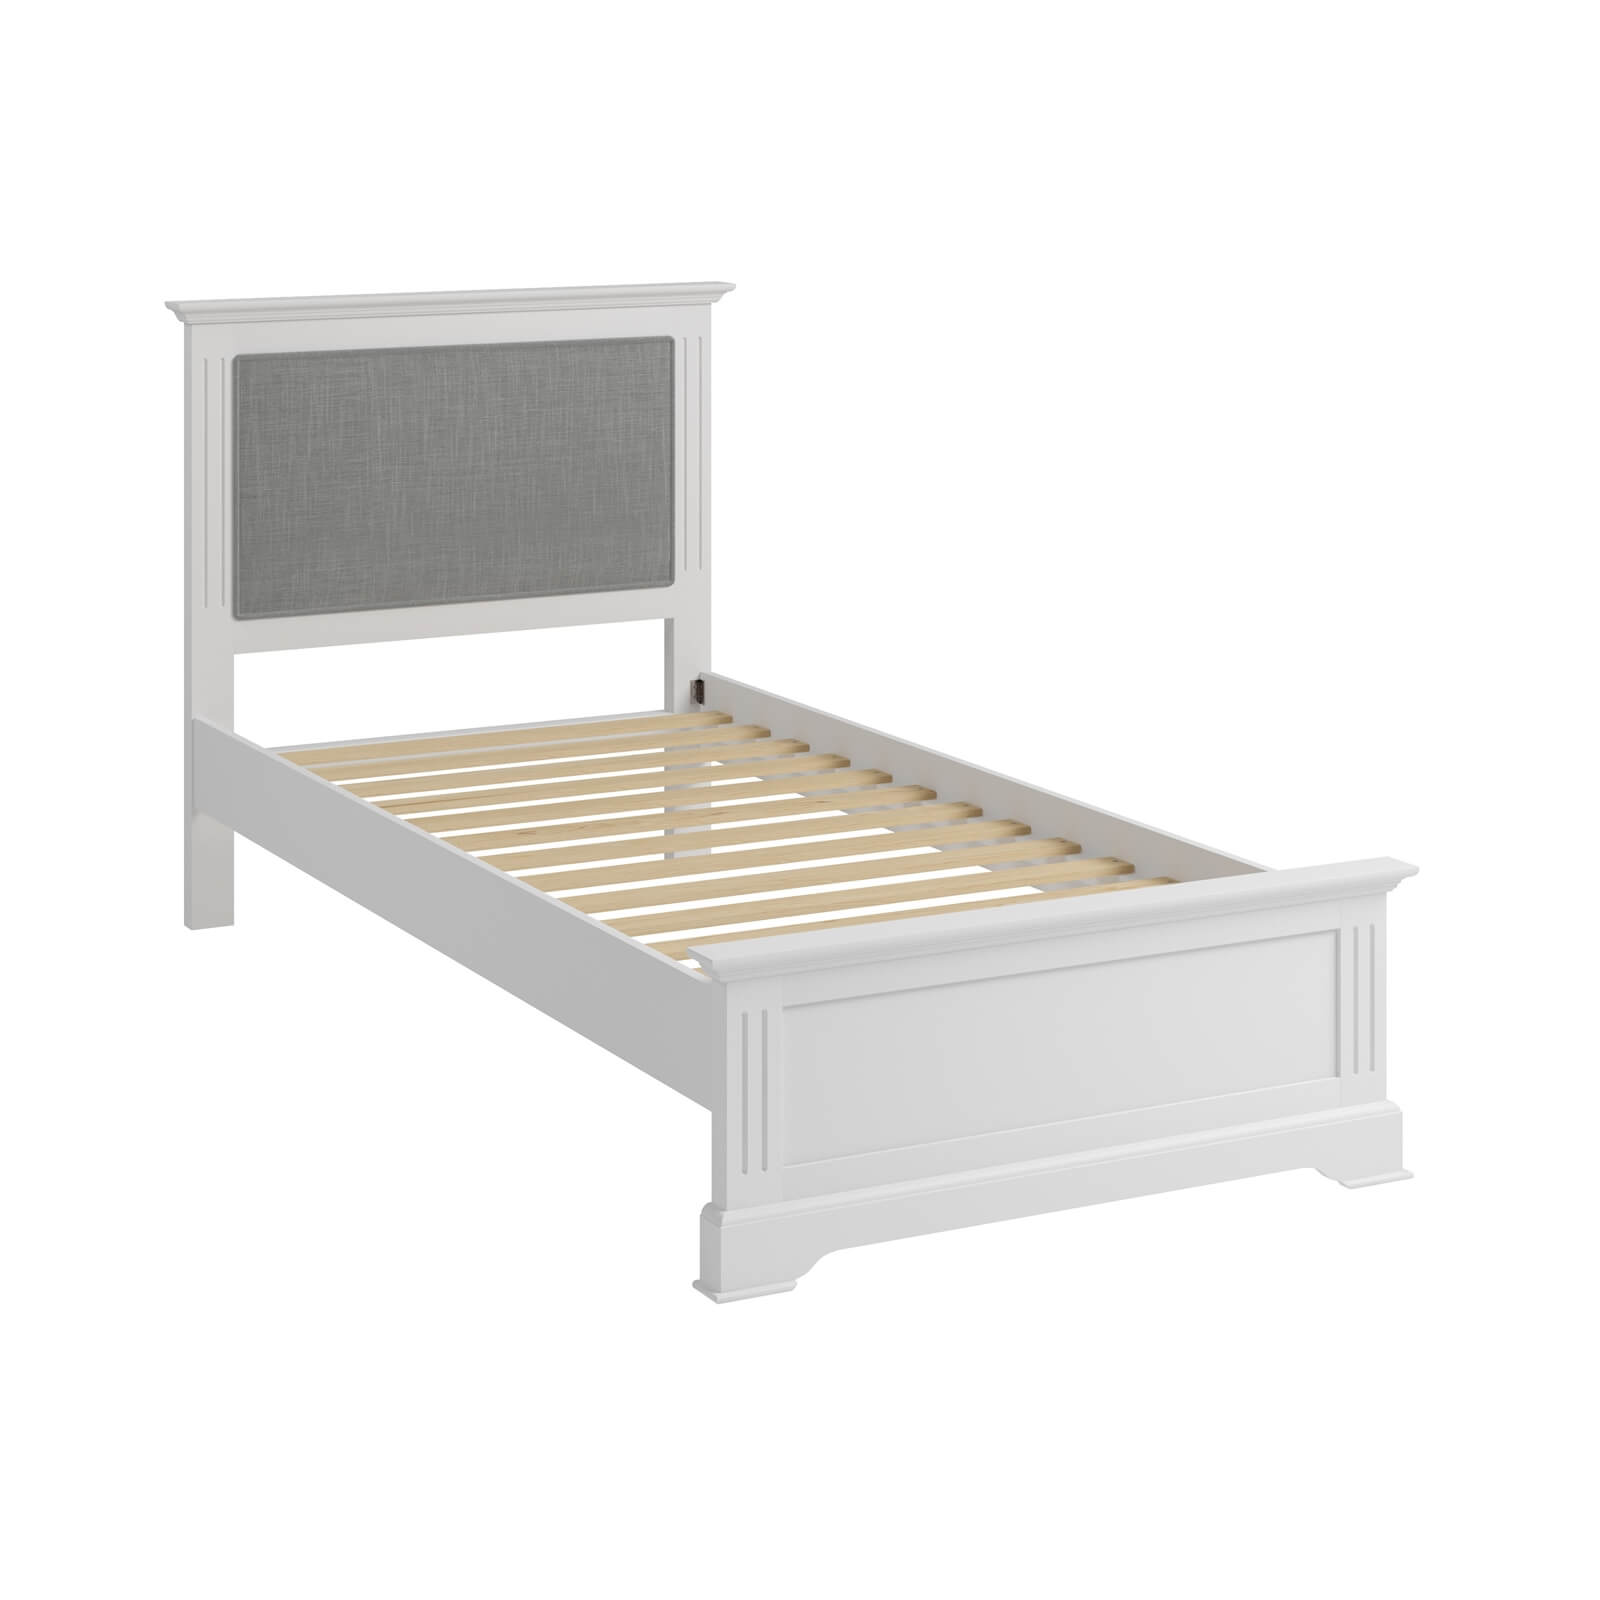 Camborne Single Bed Frame - White